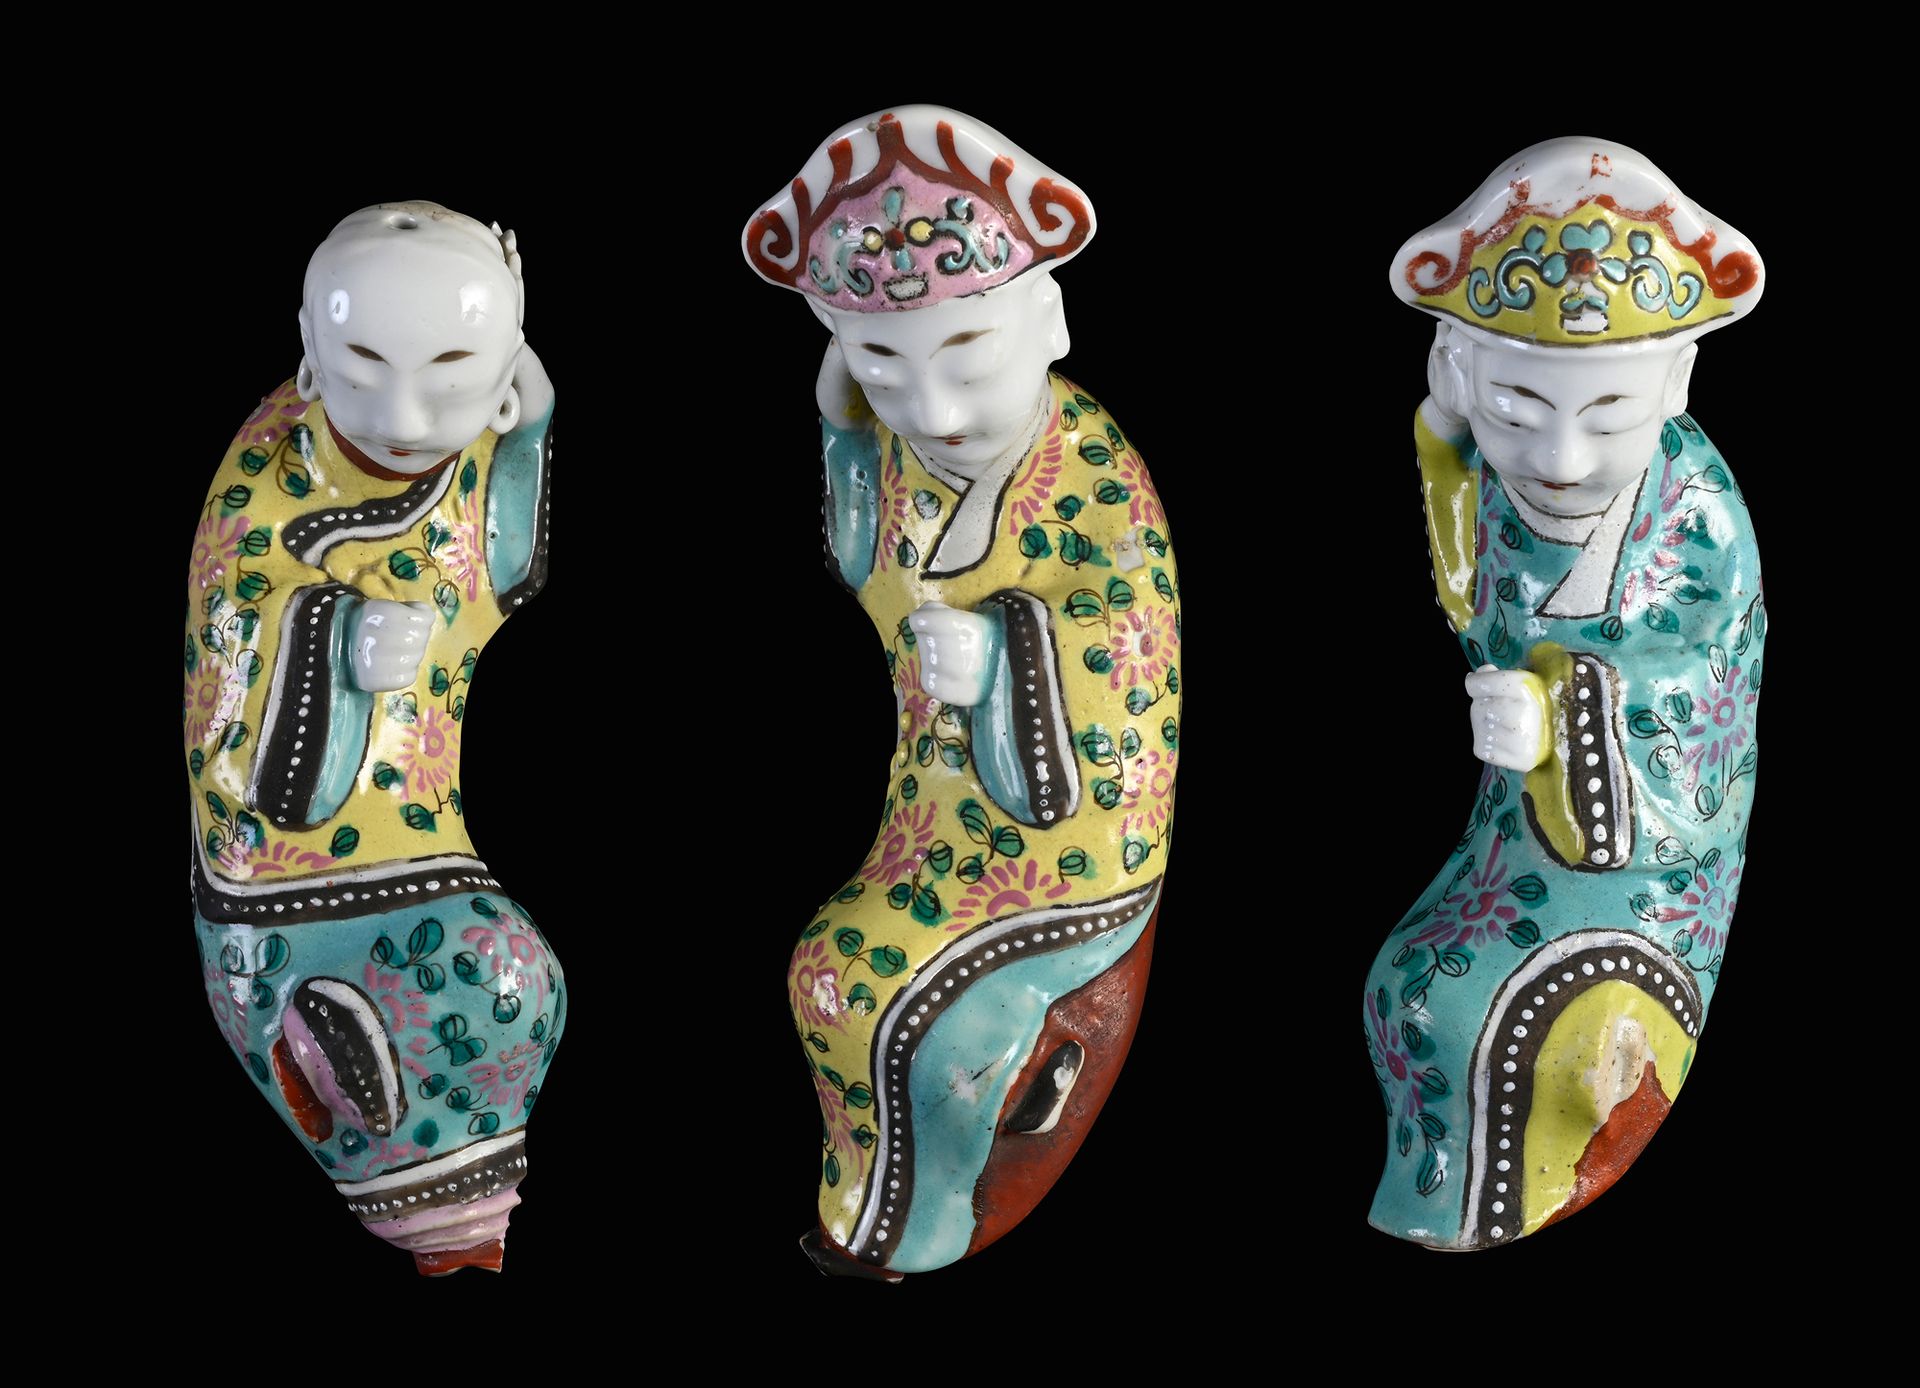 CHINE, XVIIIe siècle* 多彩珐琅彩瓷器三件套躺着的人物
长度：14厘米